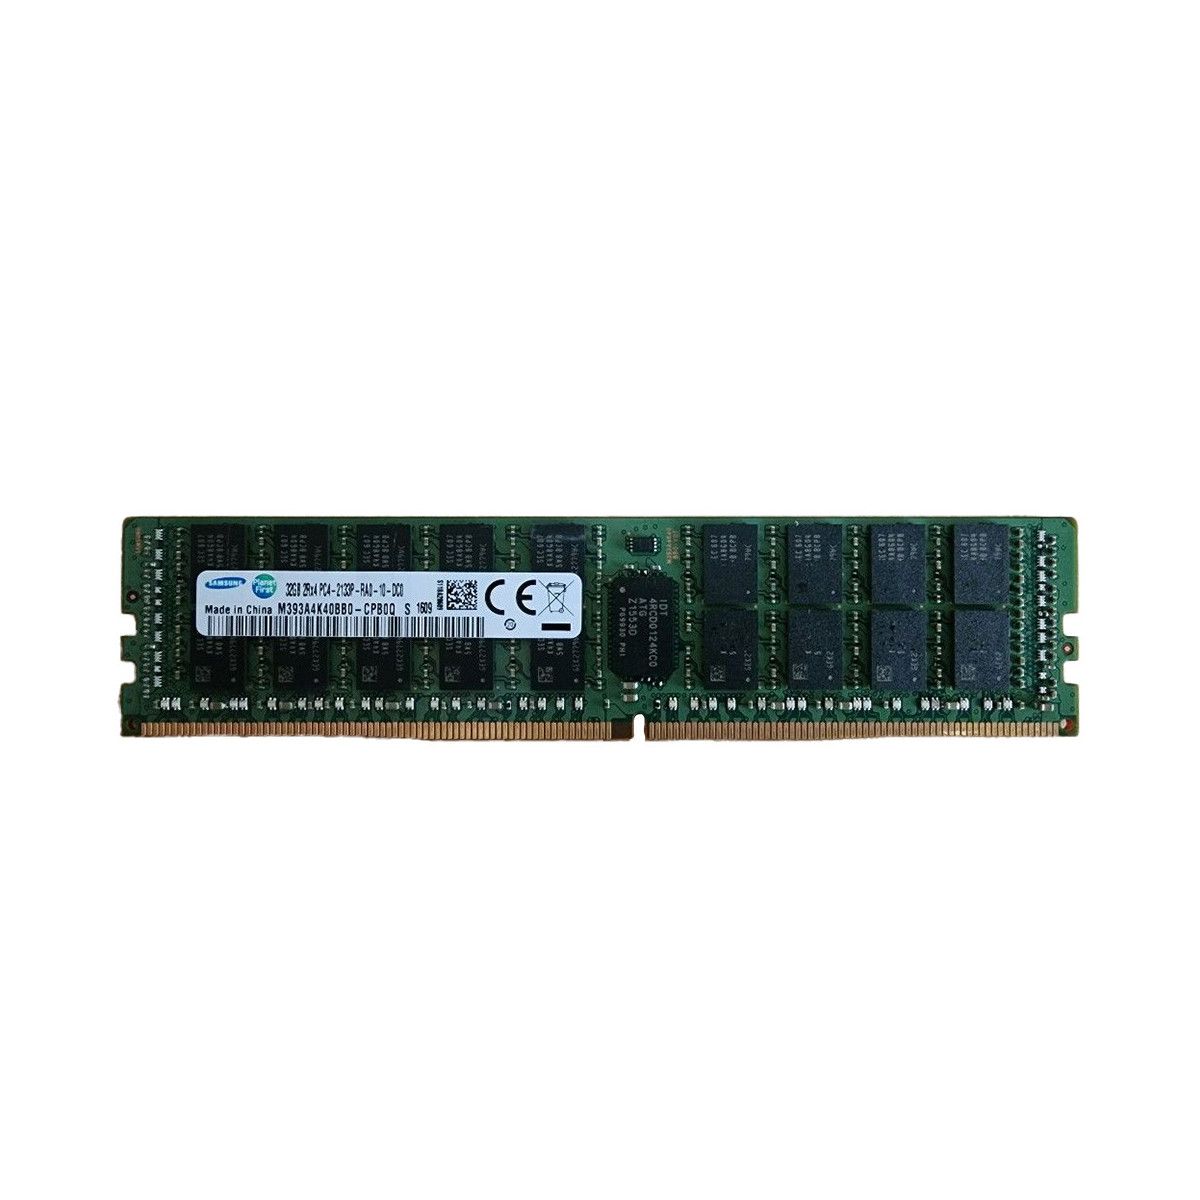 752370-091-MS - Memstar 1x 32GB DDR4-2133 RDIMM PC4-17000P-R - Mem-Star Compatible OEM Mémoire 1 - Memstar 